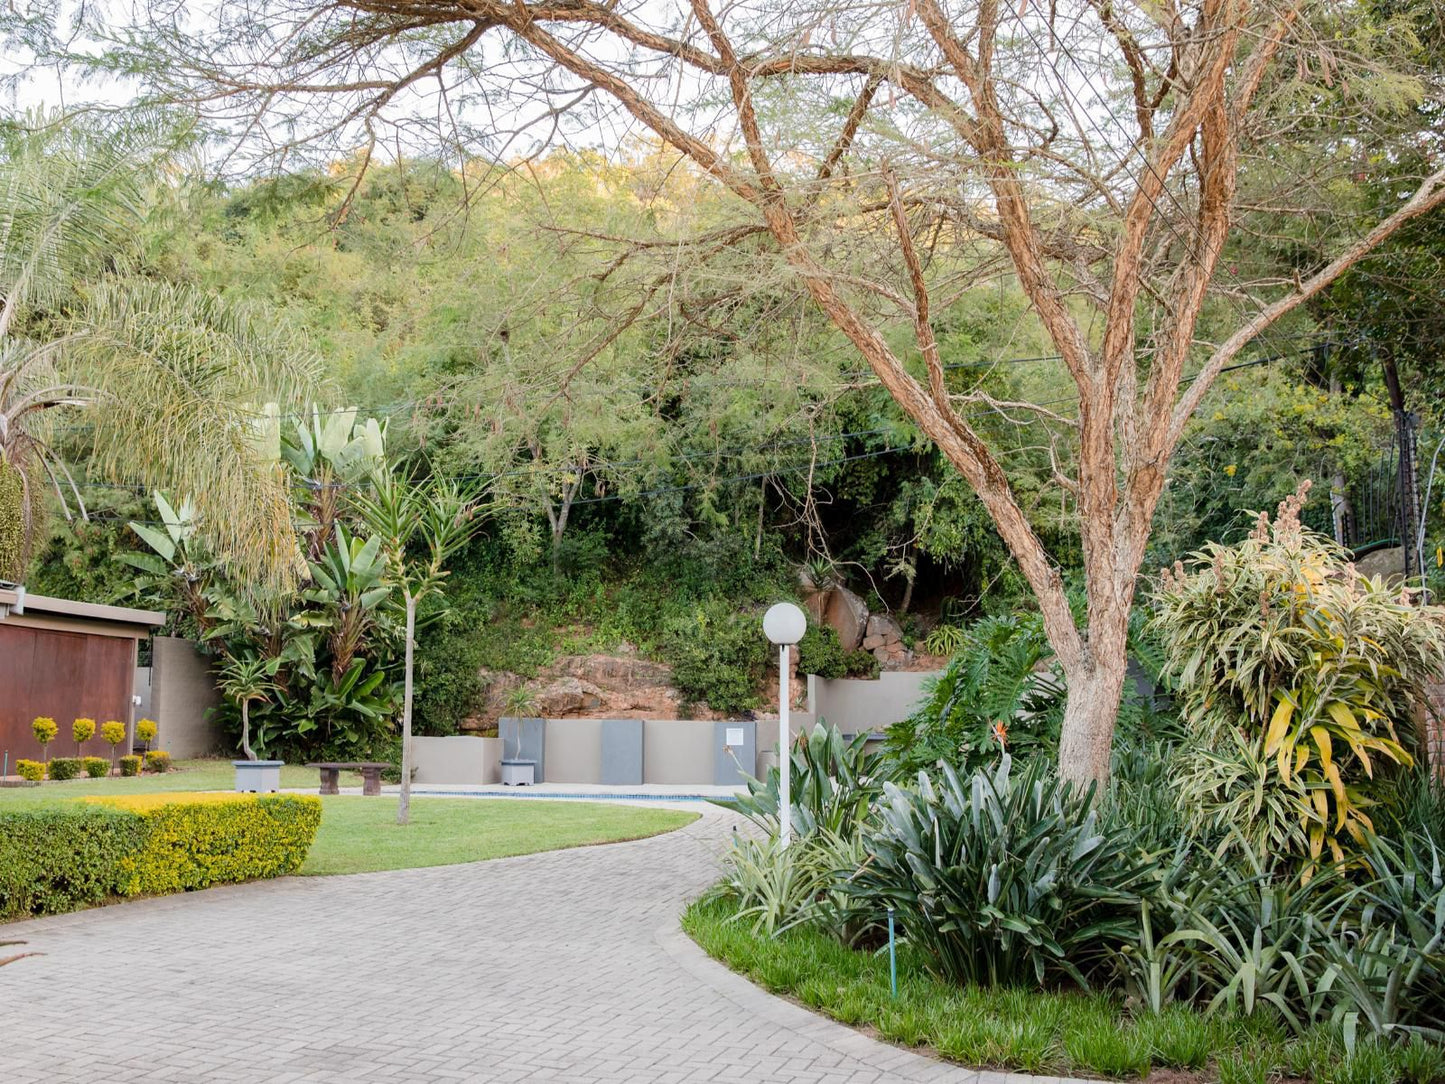 85 Ehmke Nelspruit Mpumalanga South Africa Palm Tree, Plant, Nature, Wood, Garden